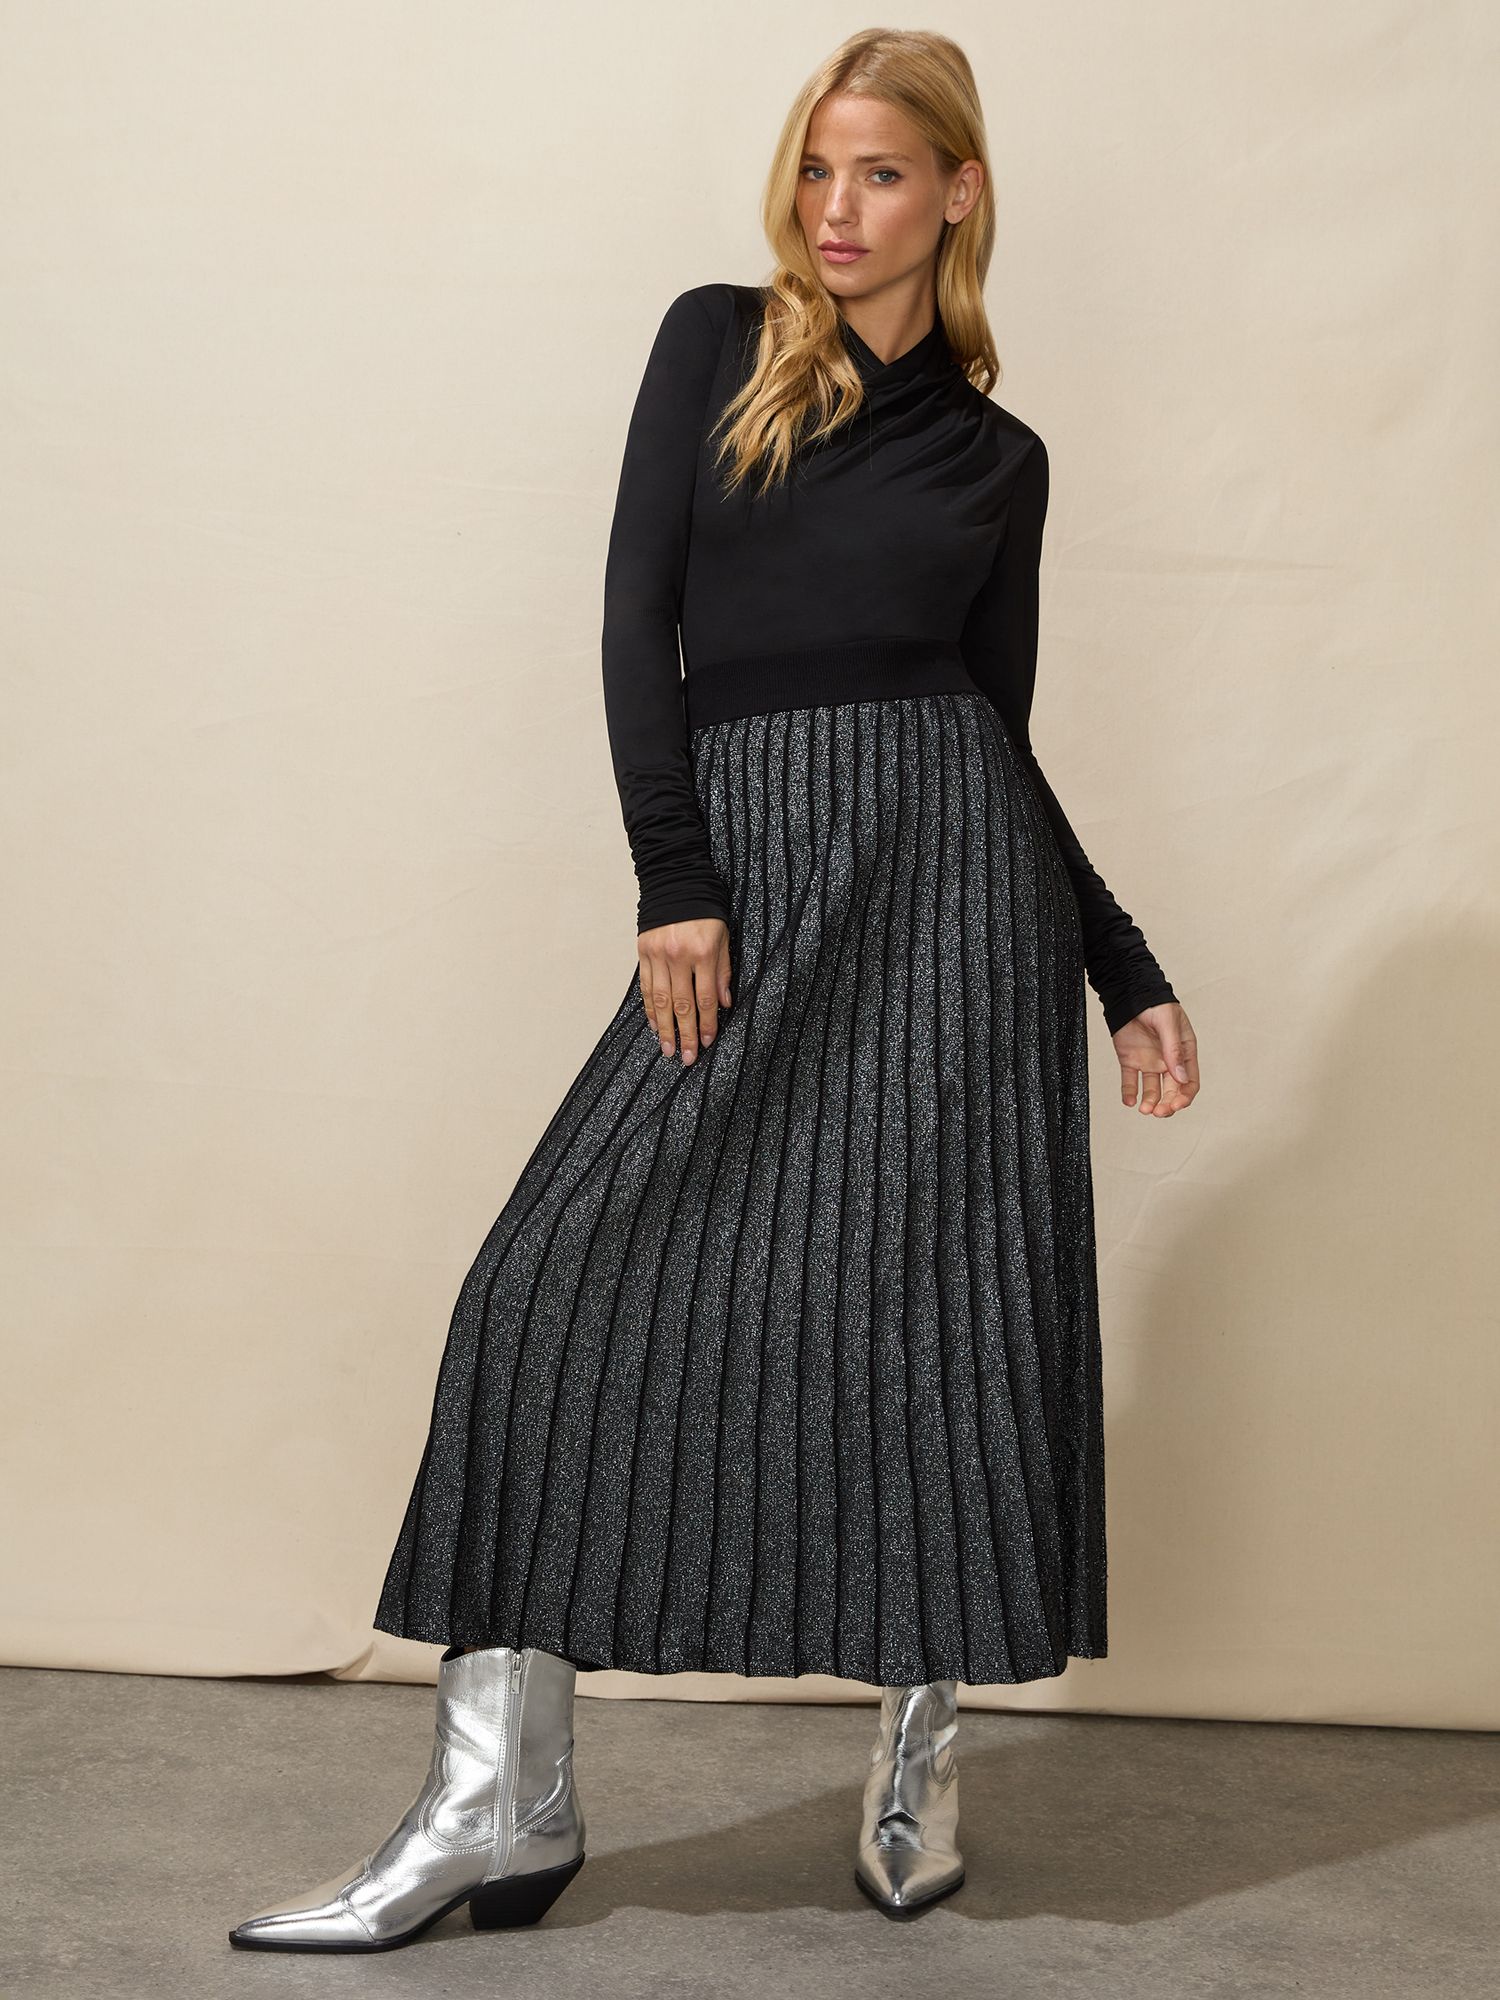 Ro&Zo Knit Pleated Midi Skirt, Black/Silver at John Lewis & Partners